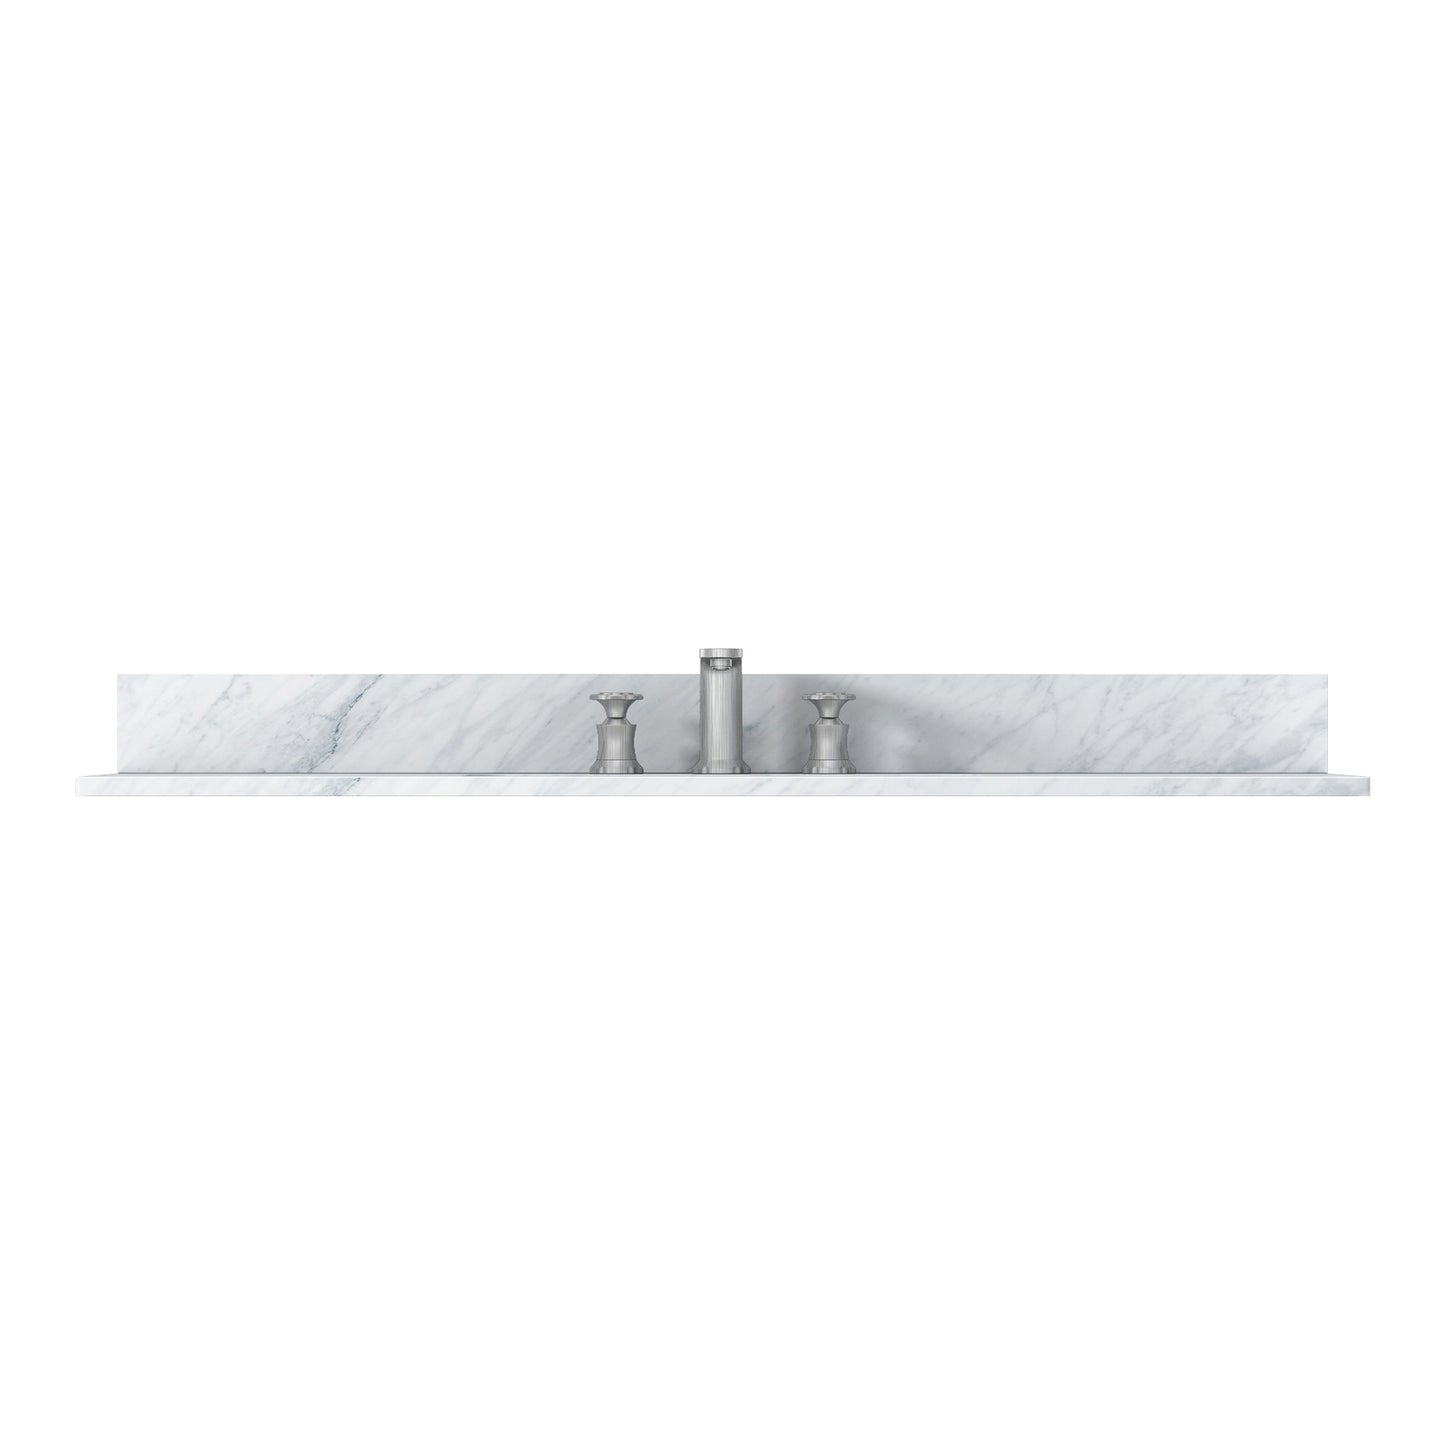 Bathroom Vanity Top49 "x 22" natural stone   Carrara white natural marble, CUPC ceramic sink and three-hole faucet hole with backsplash